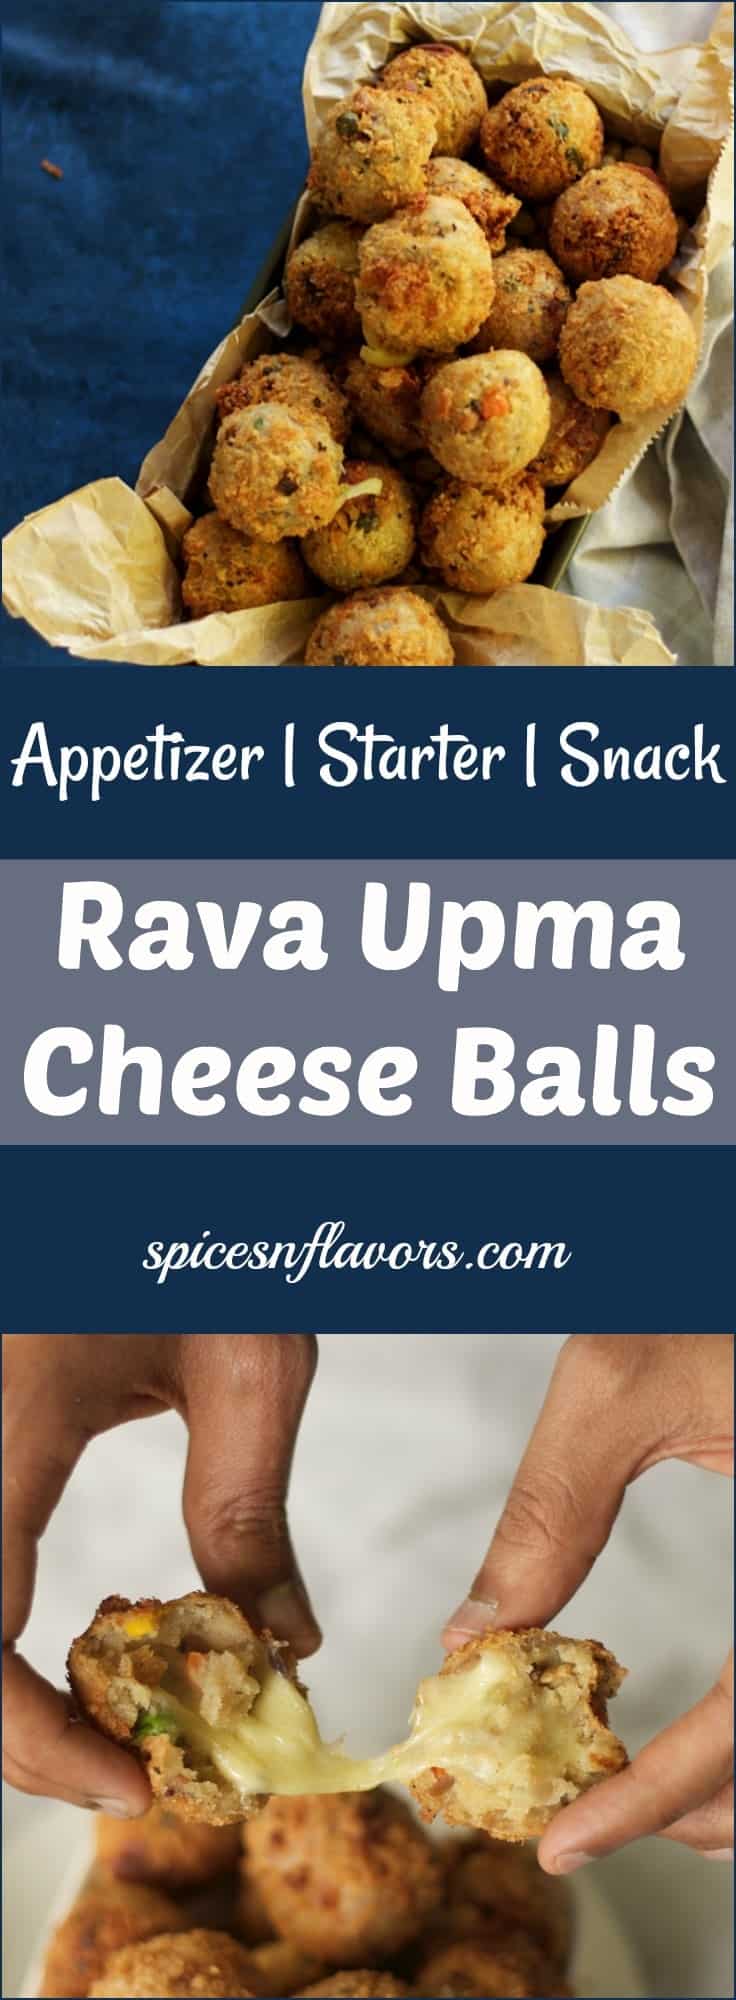 rava upma cheese balls how to make use of leftover rava upma rava upma breakfast recipe quick and simple easy breakfast leftover rava upma recipe